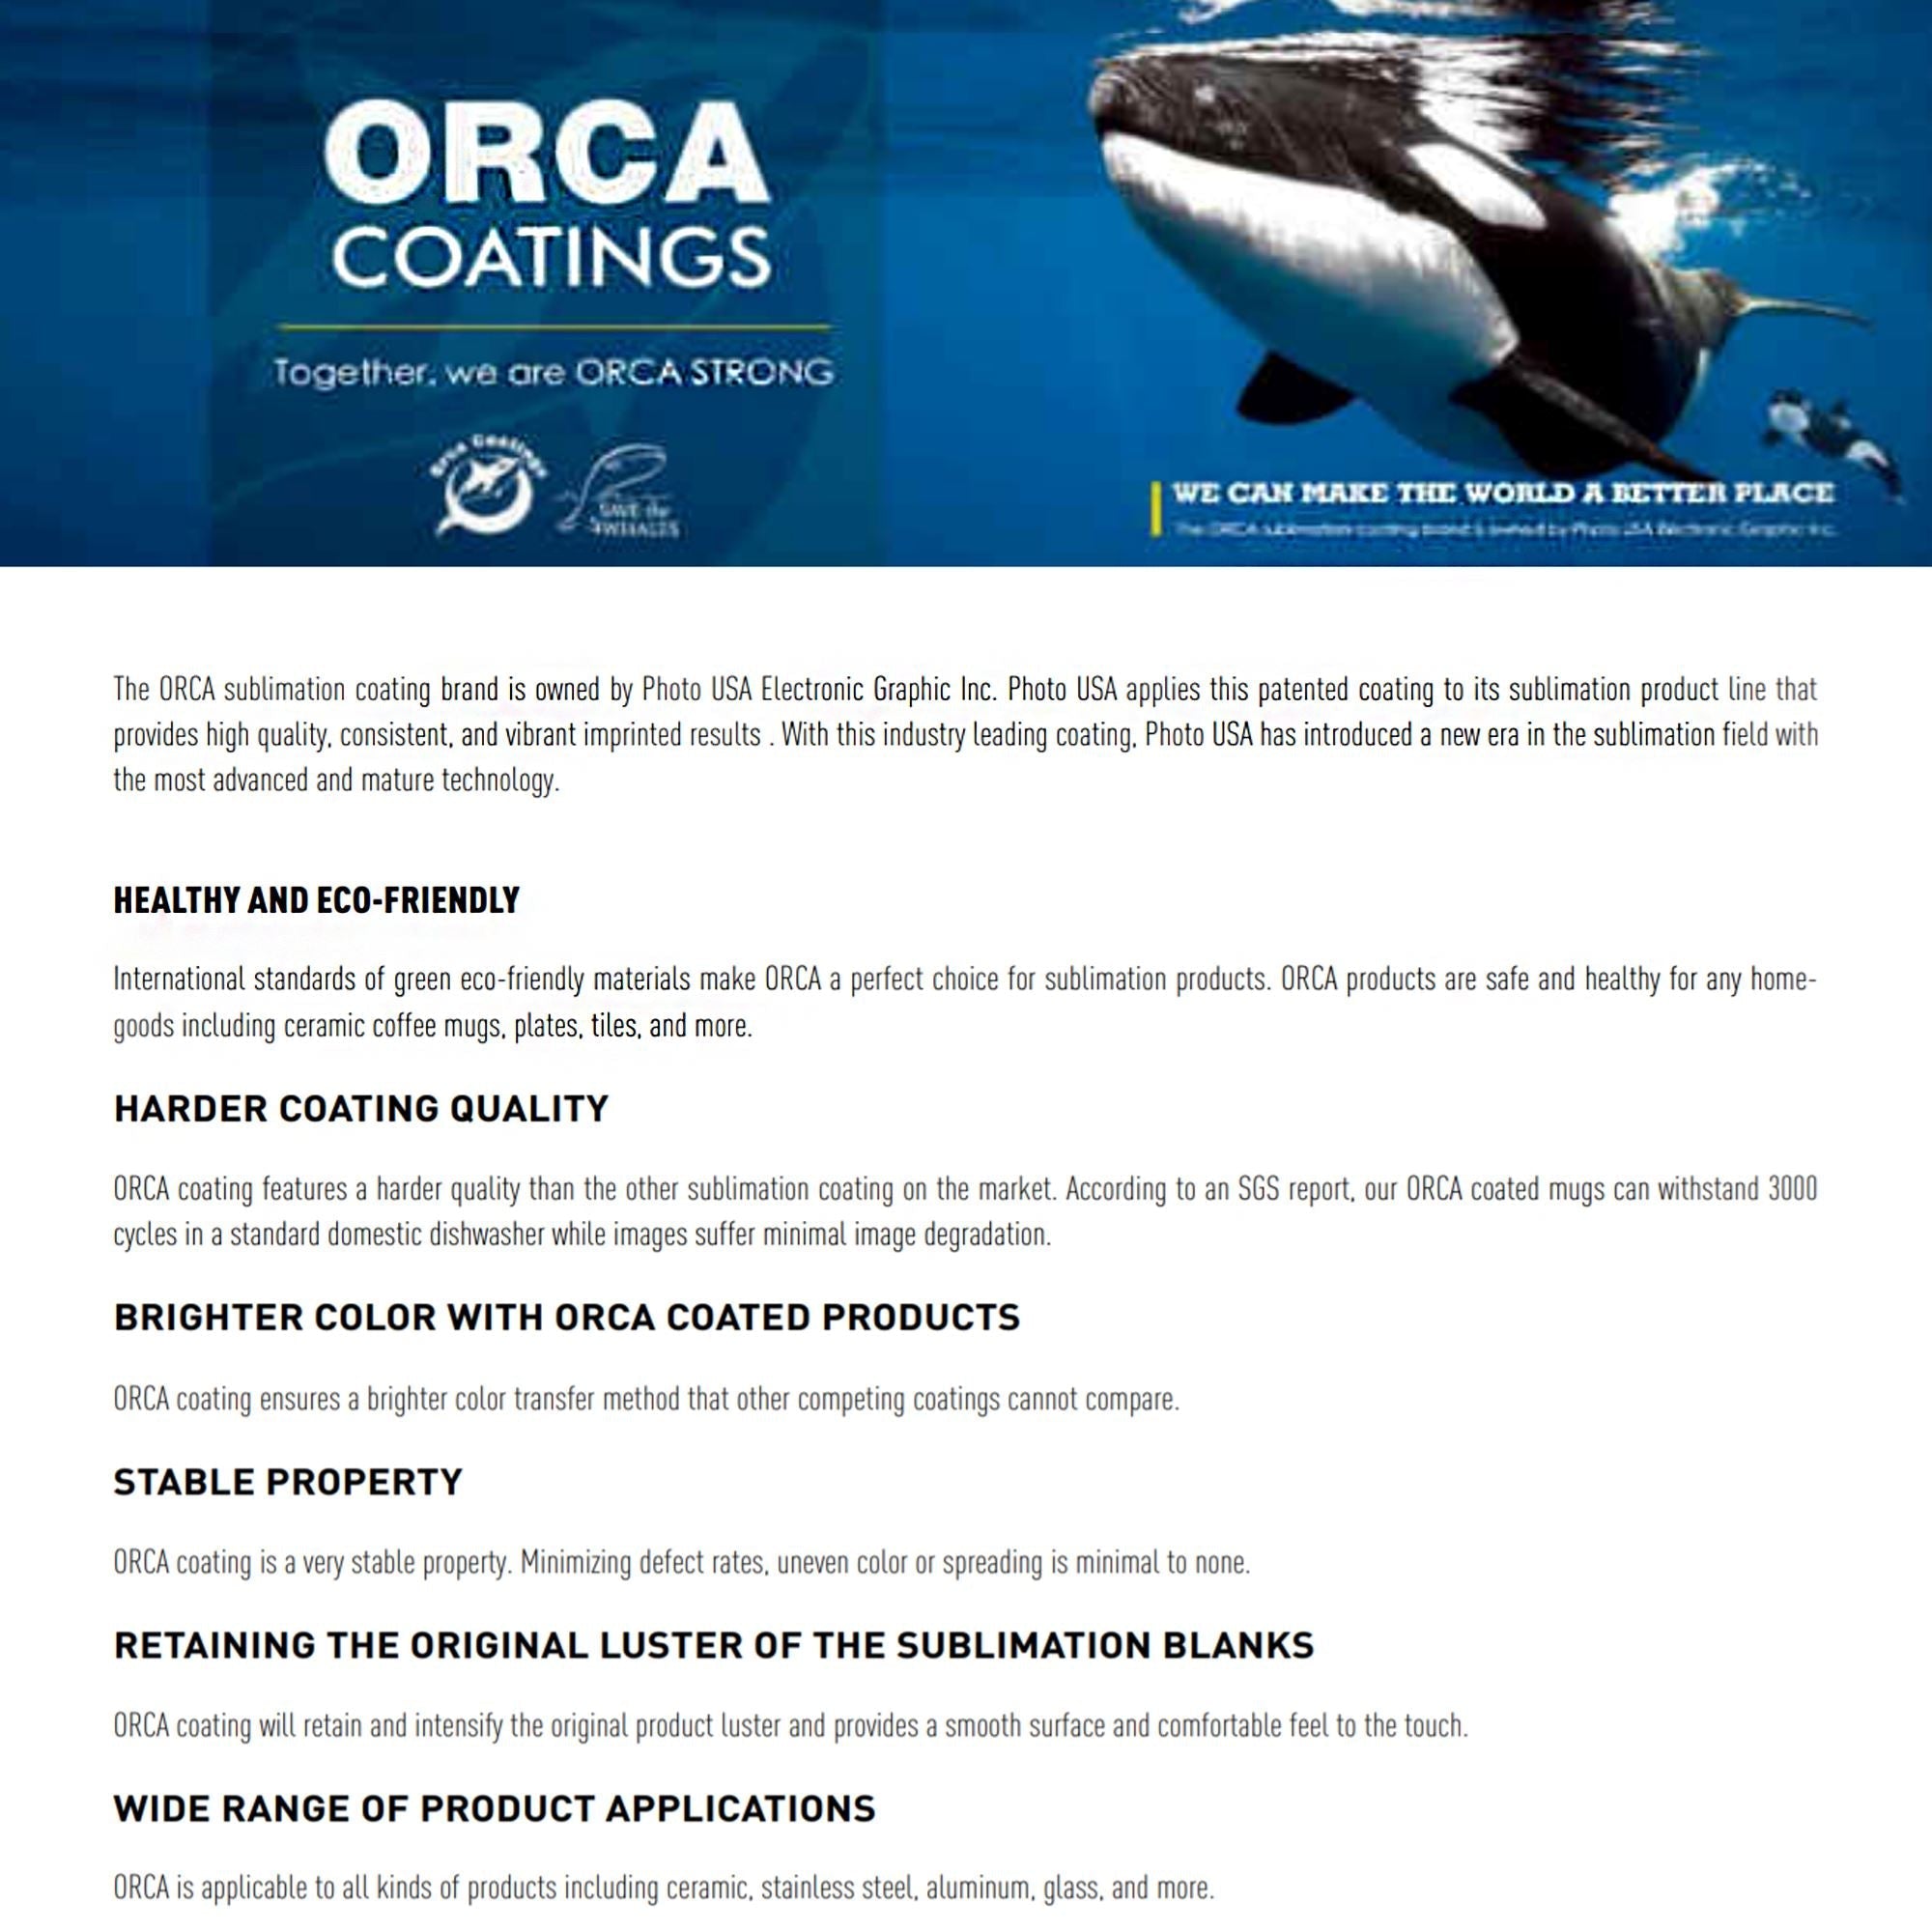 14 oz. Sublimation Stainless Steel Travel Mug with ORCA Coatings